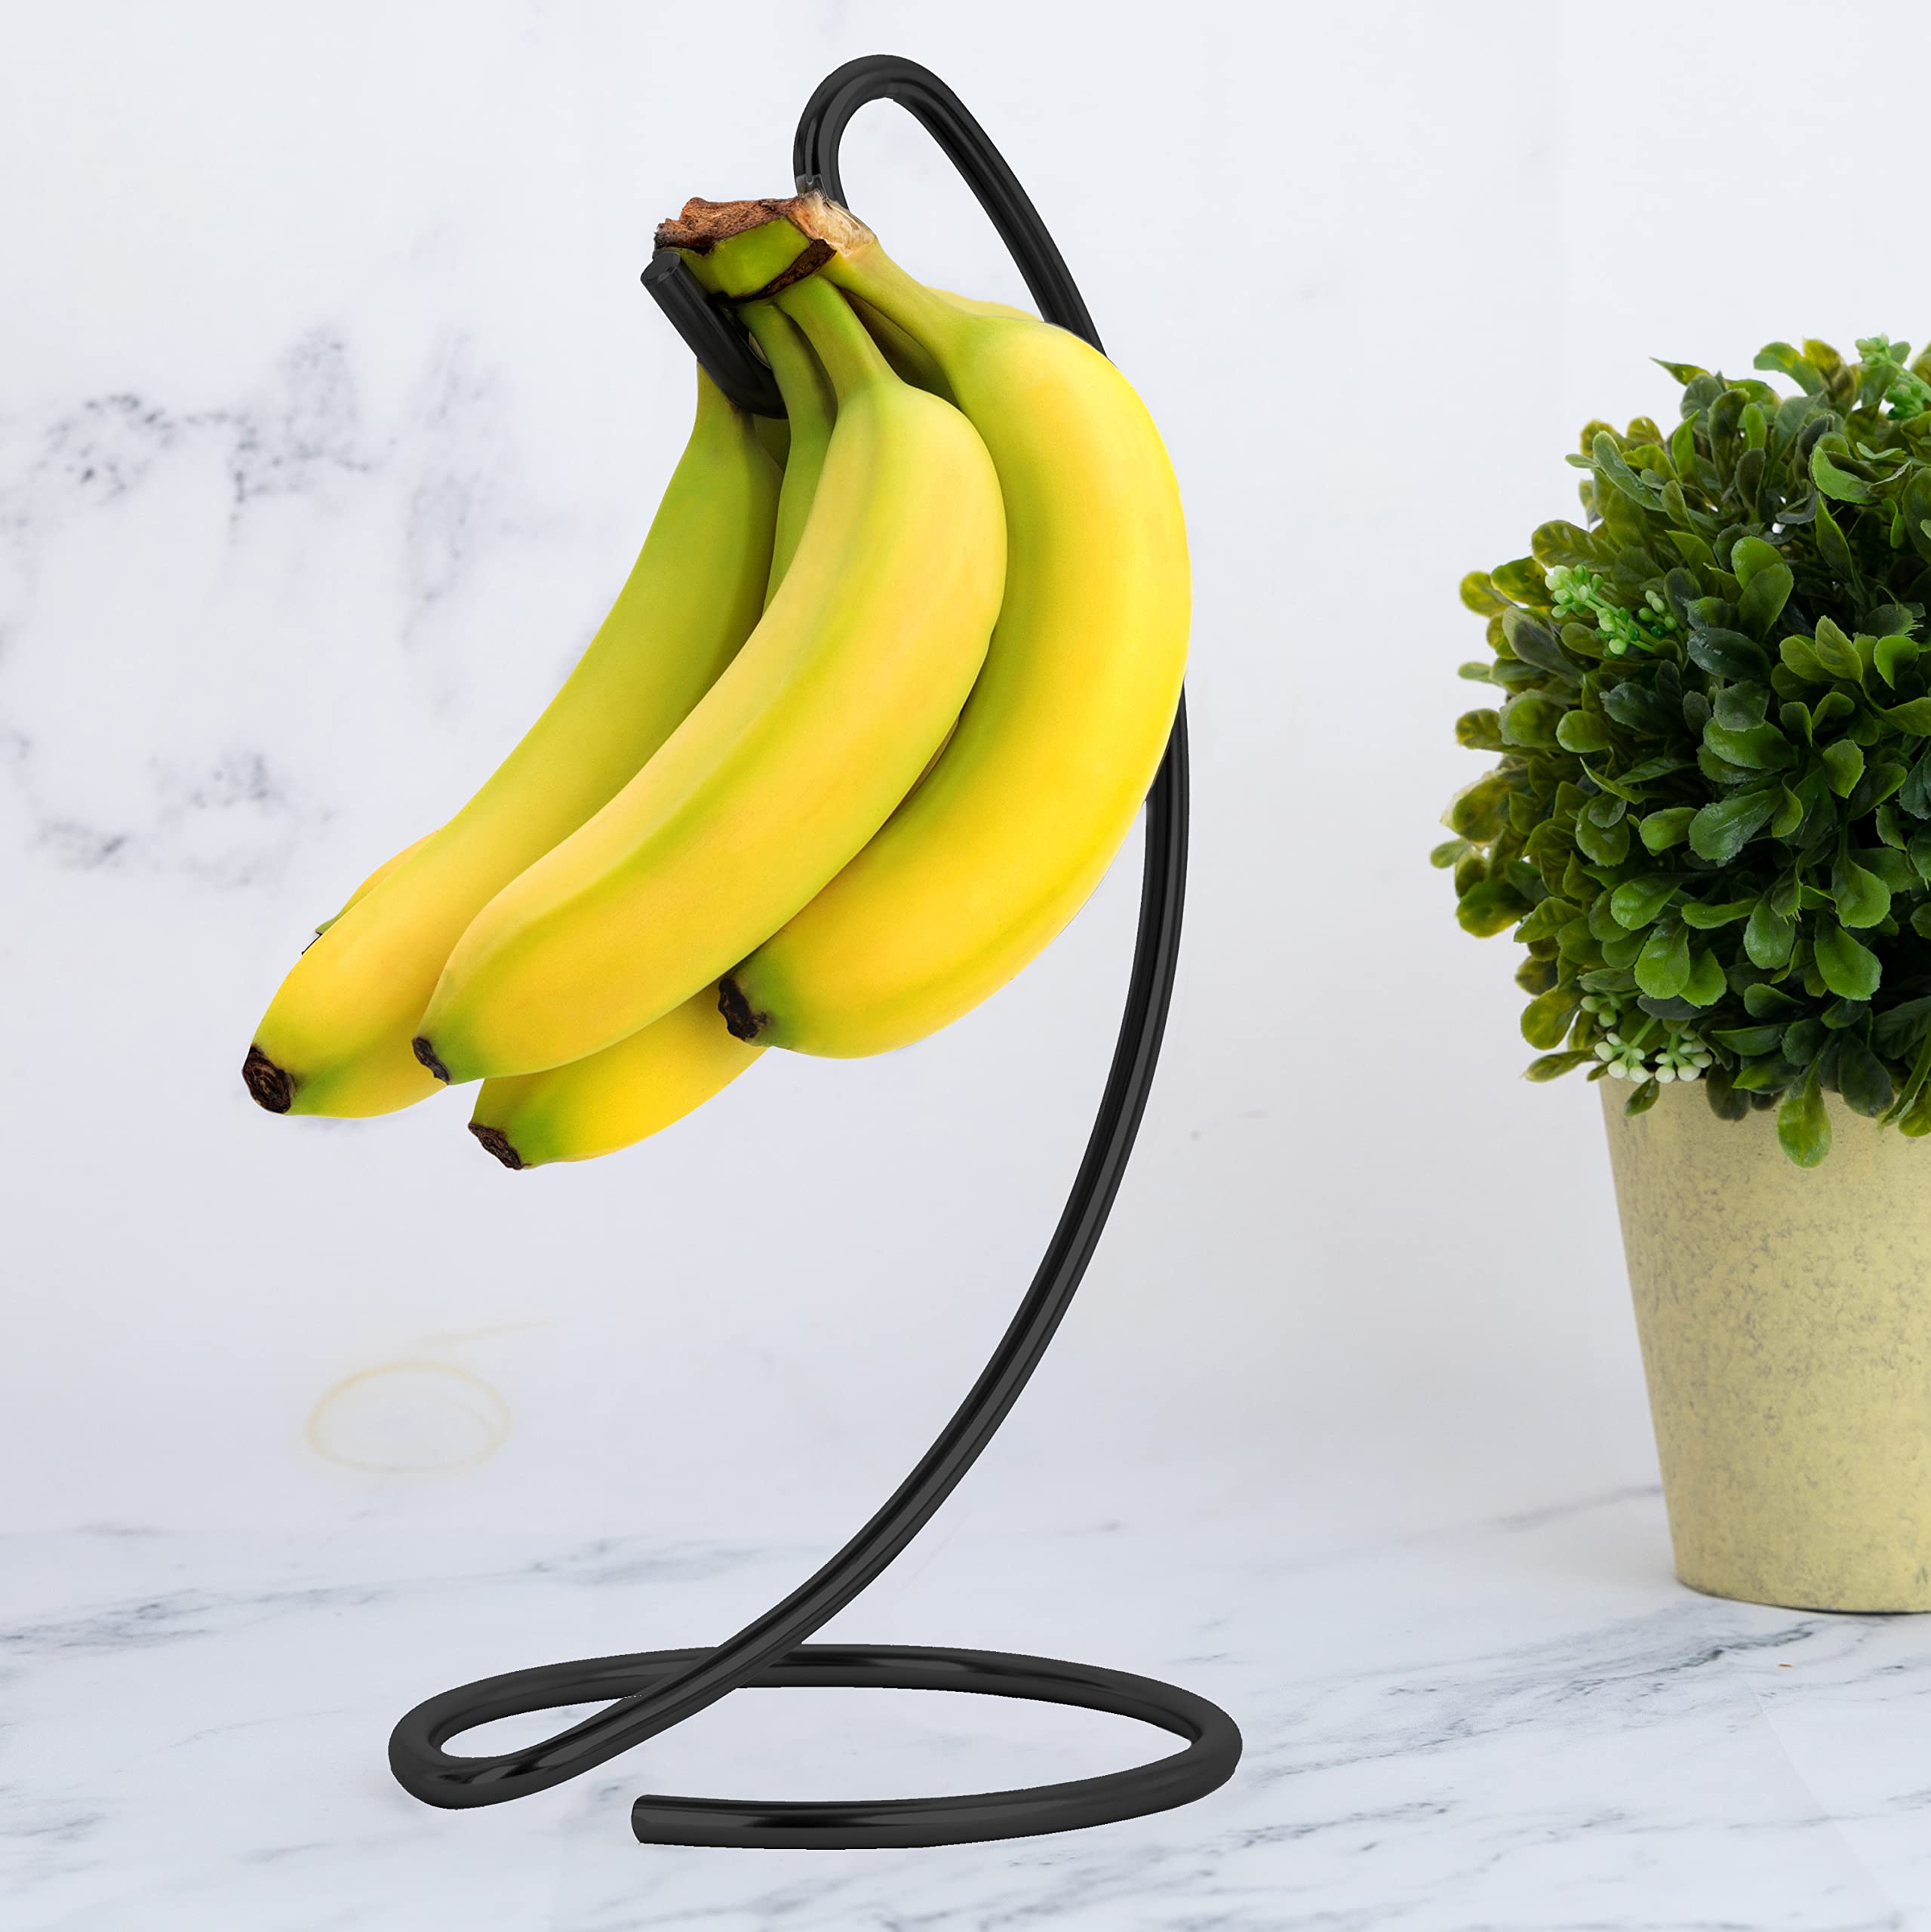 Homeries Banana Holder Modern Banana Hanger Tree Stand Hook for Kitchen Countertop, Copper Banana Stand (Black)  - Acceptable